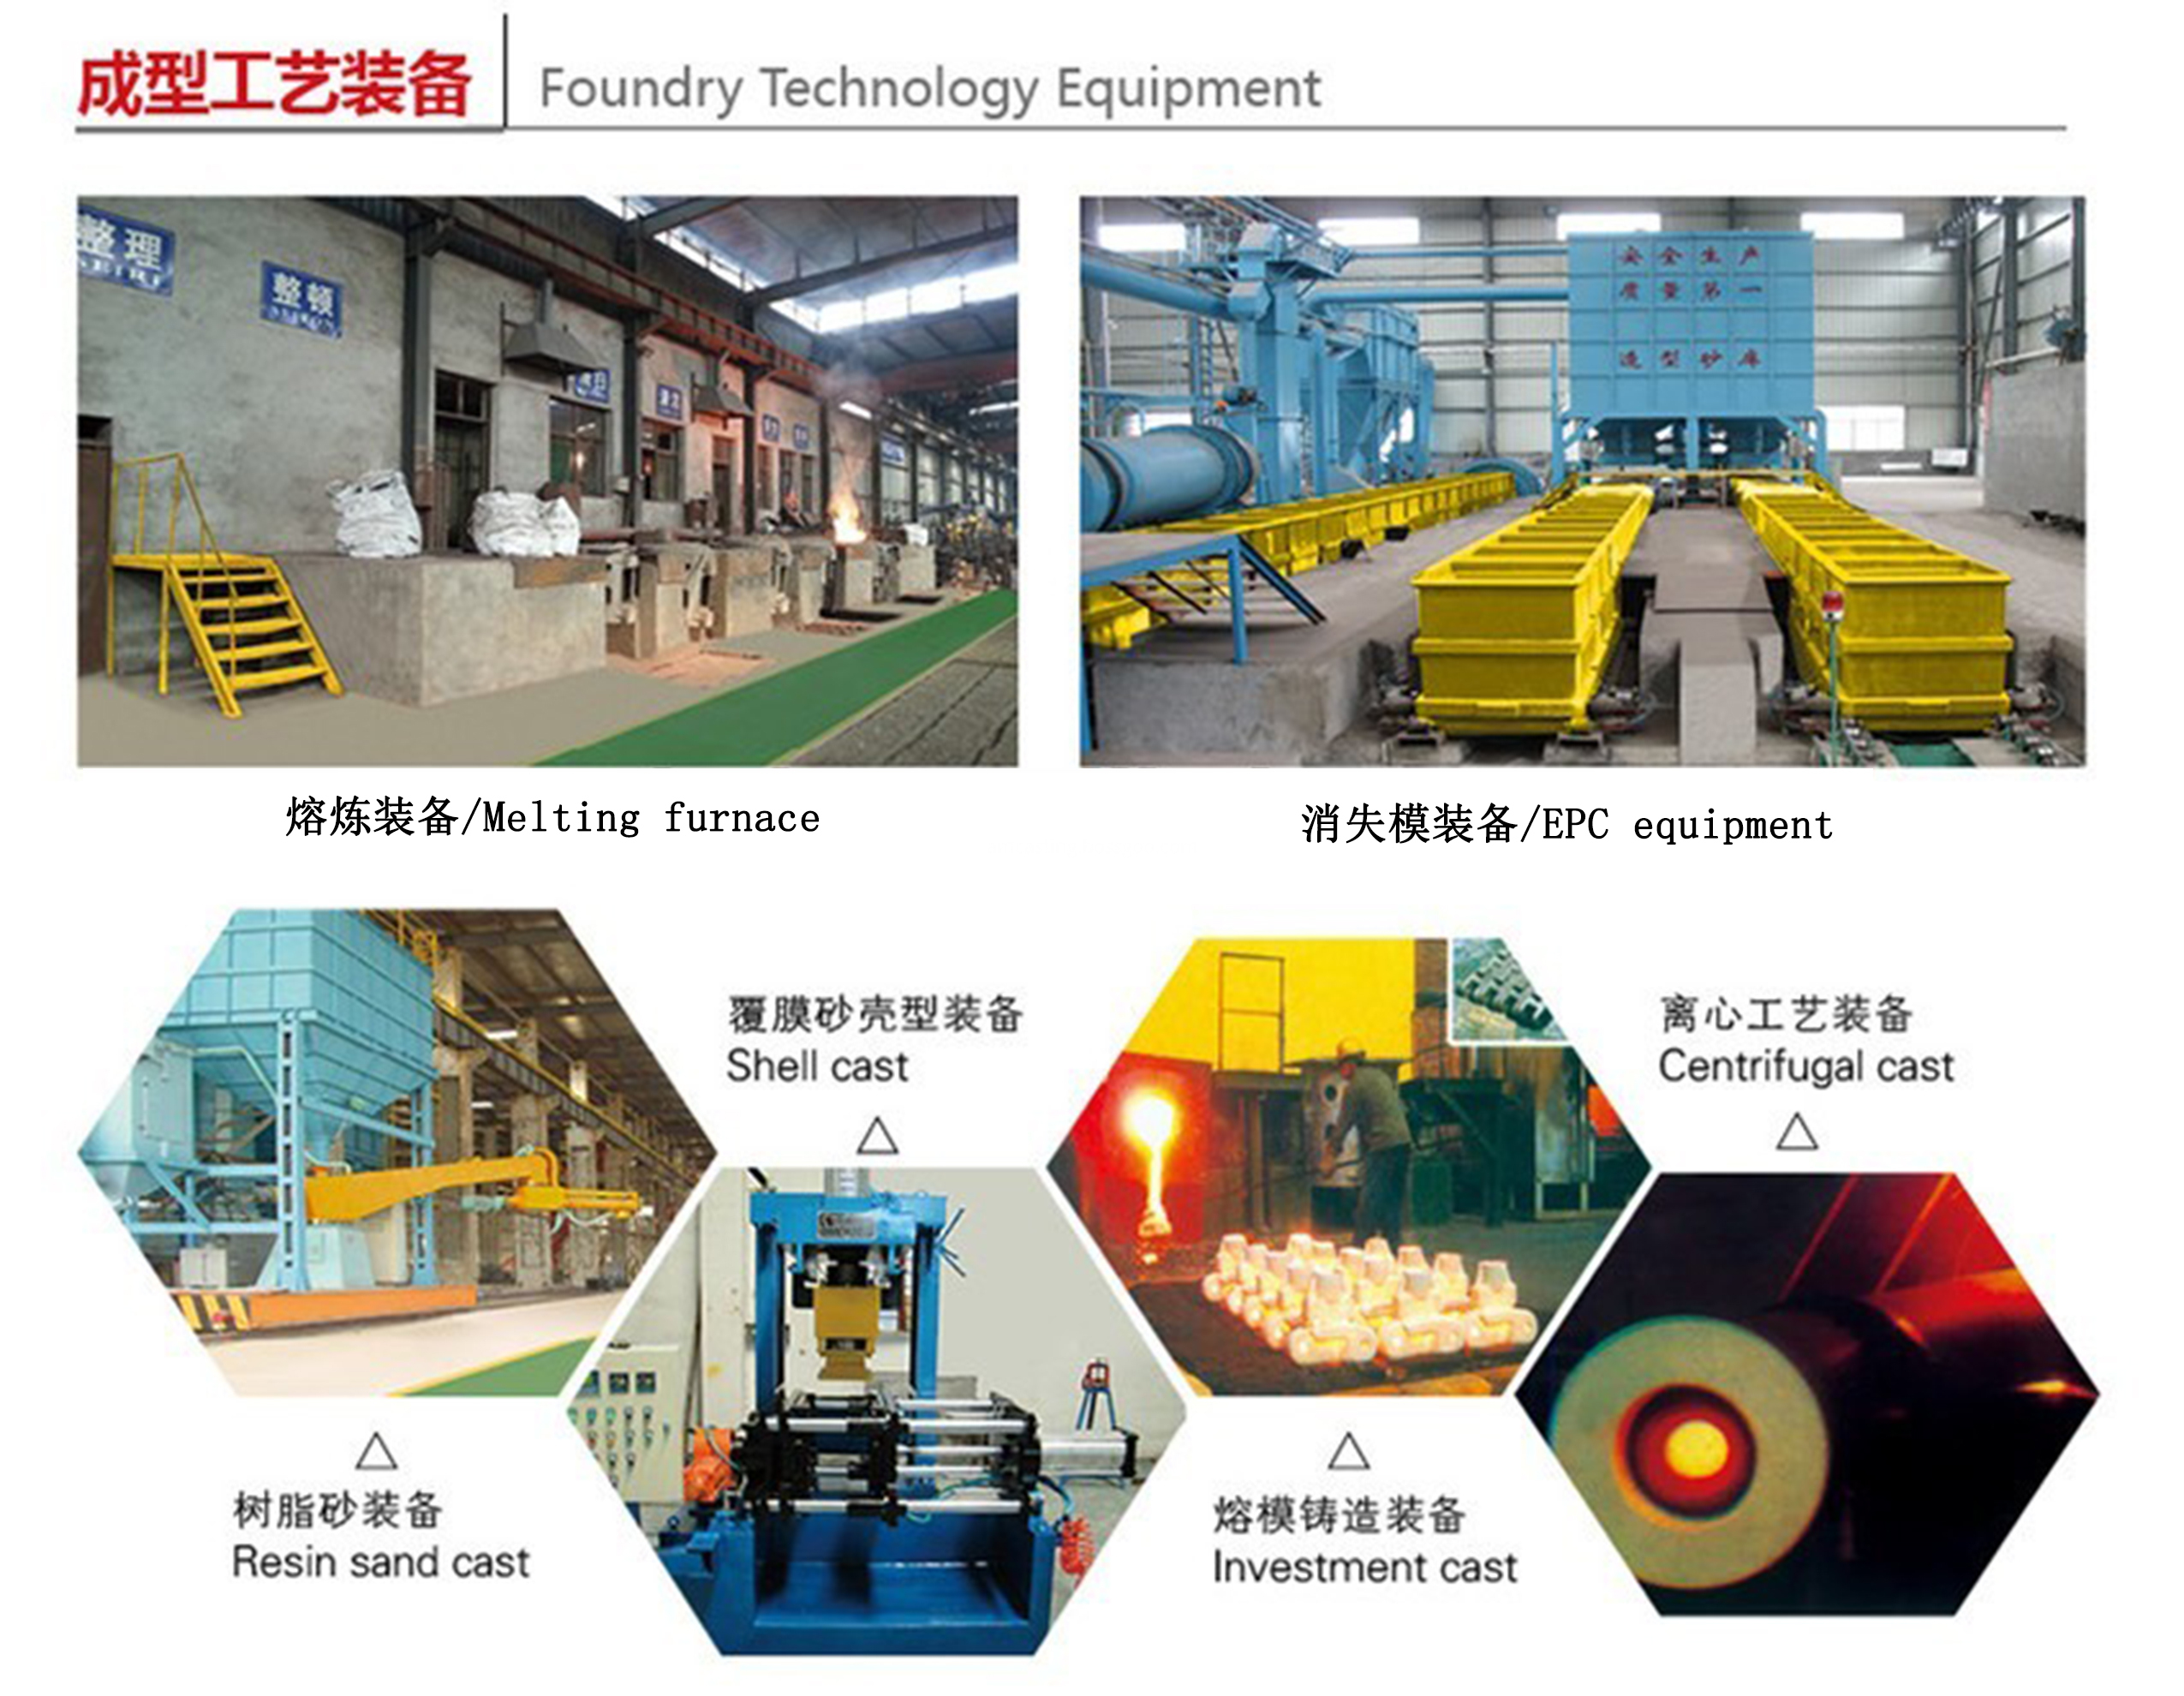 1 Foundry Technology Equipment